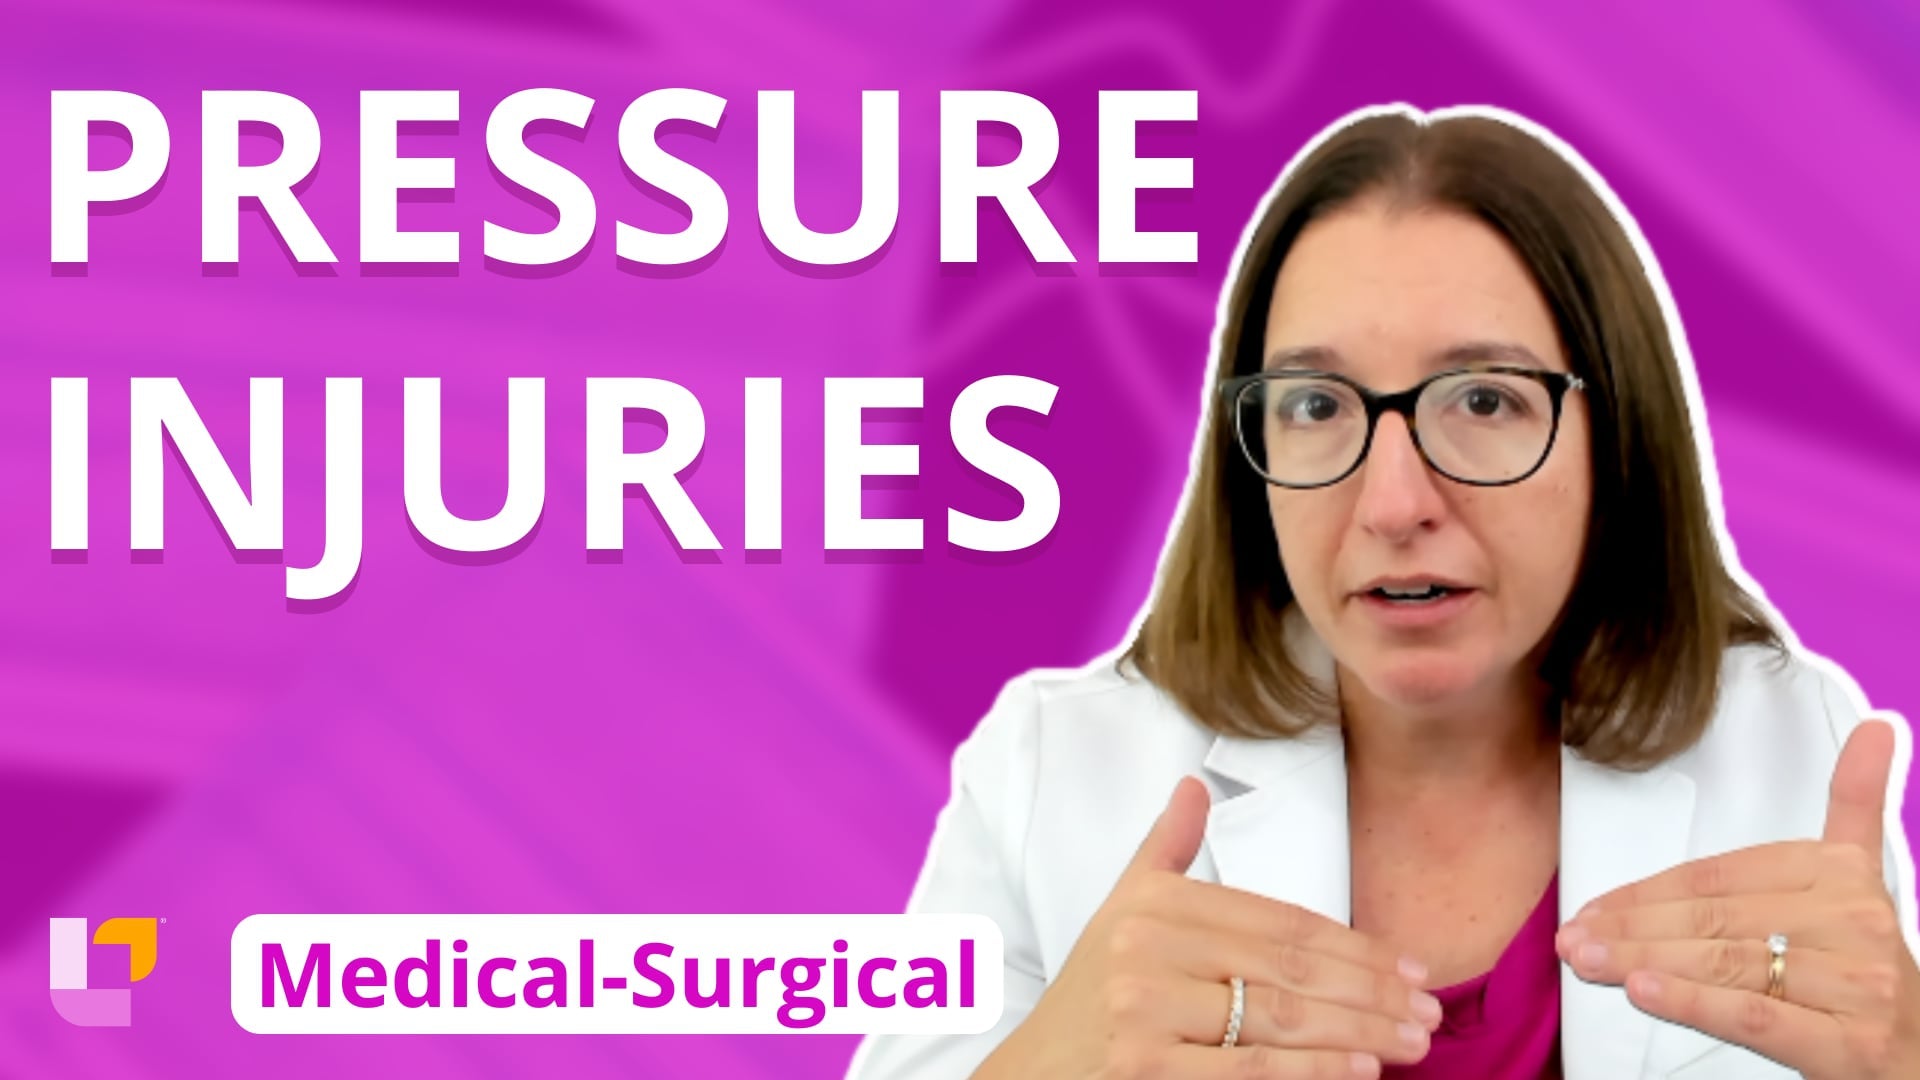 Med-Surg - Integumentary System, part 2: Pressure Injuries - LevelUpRN